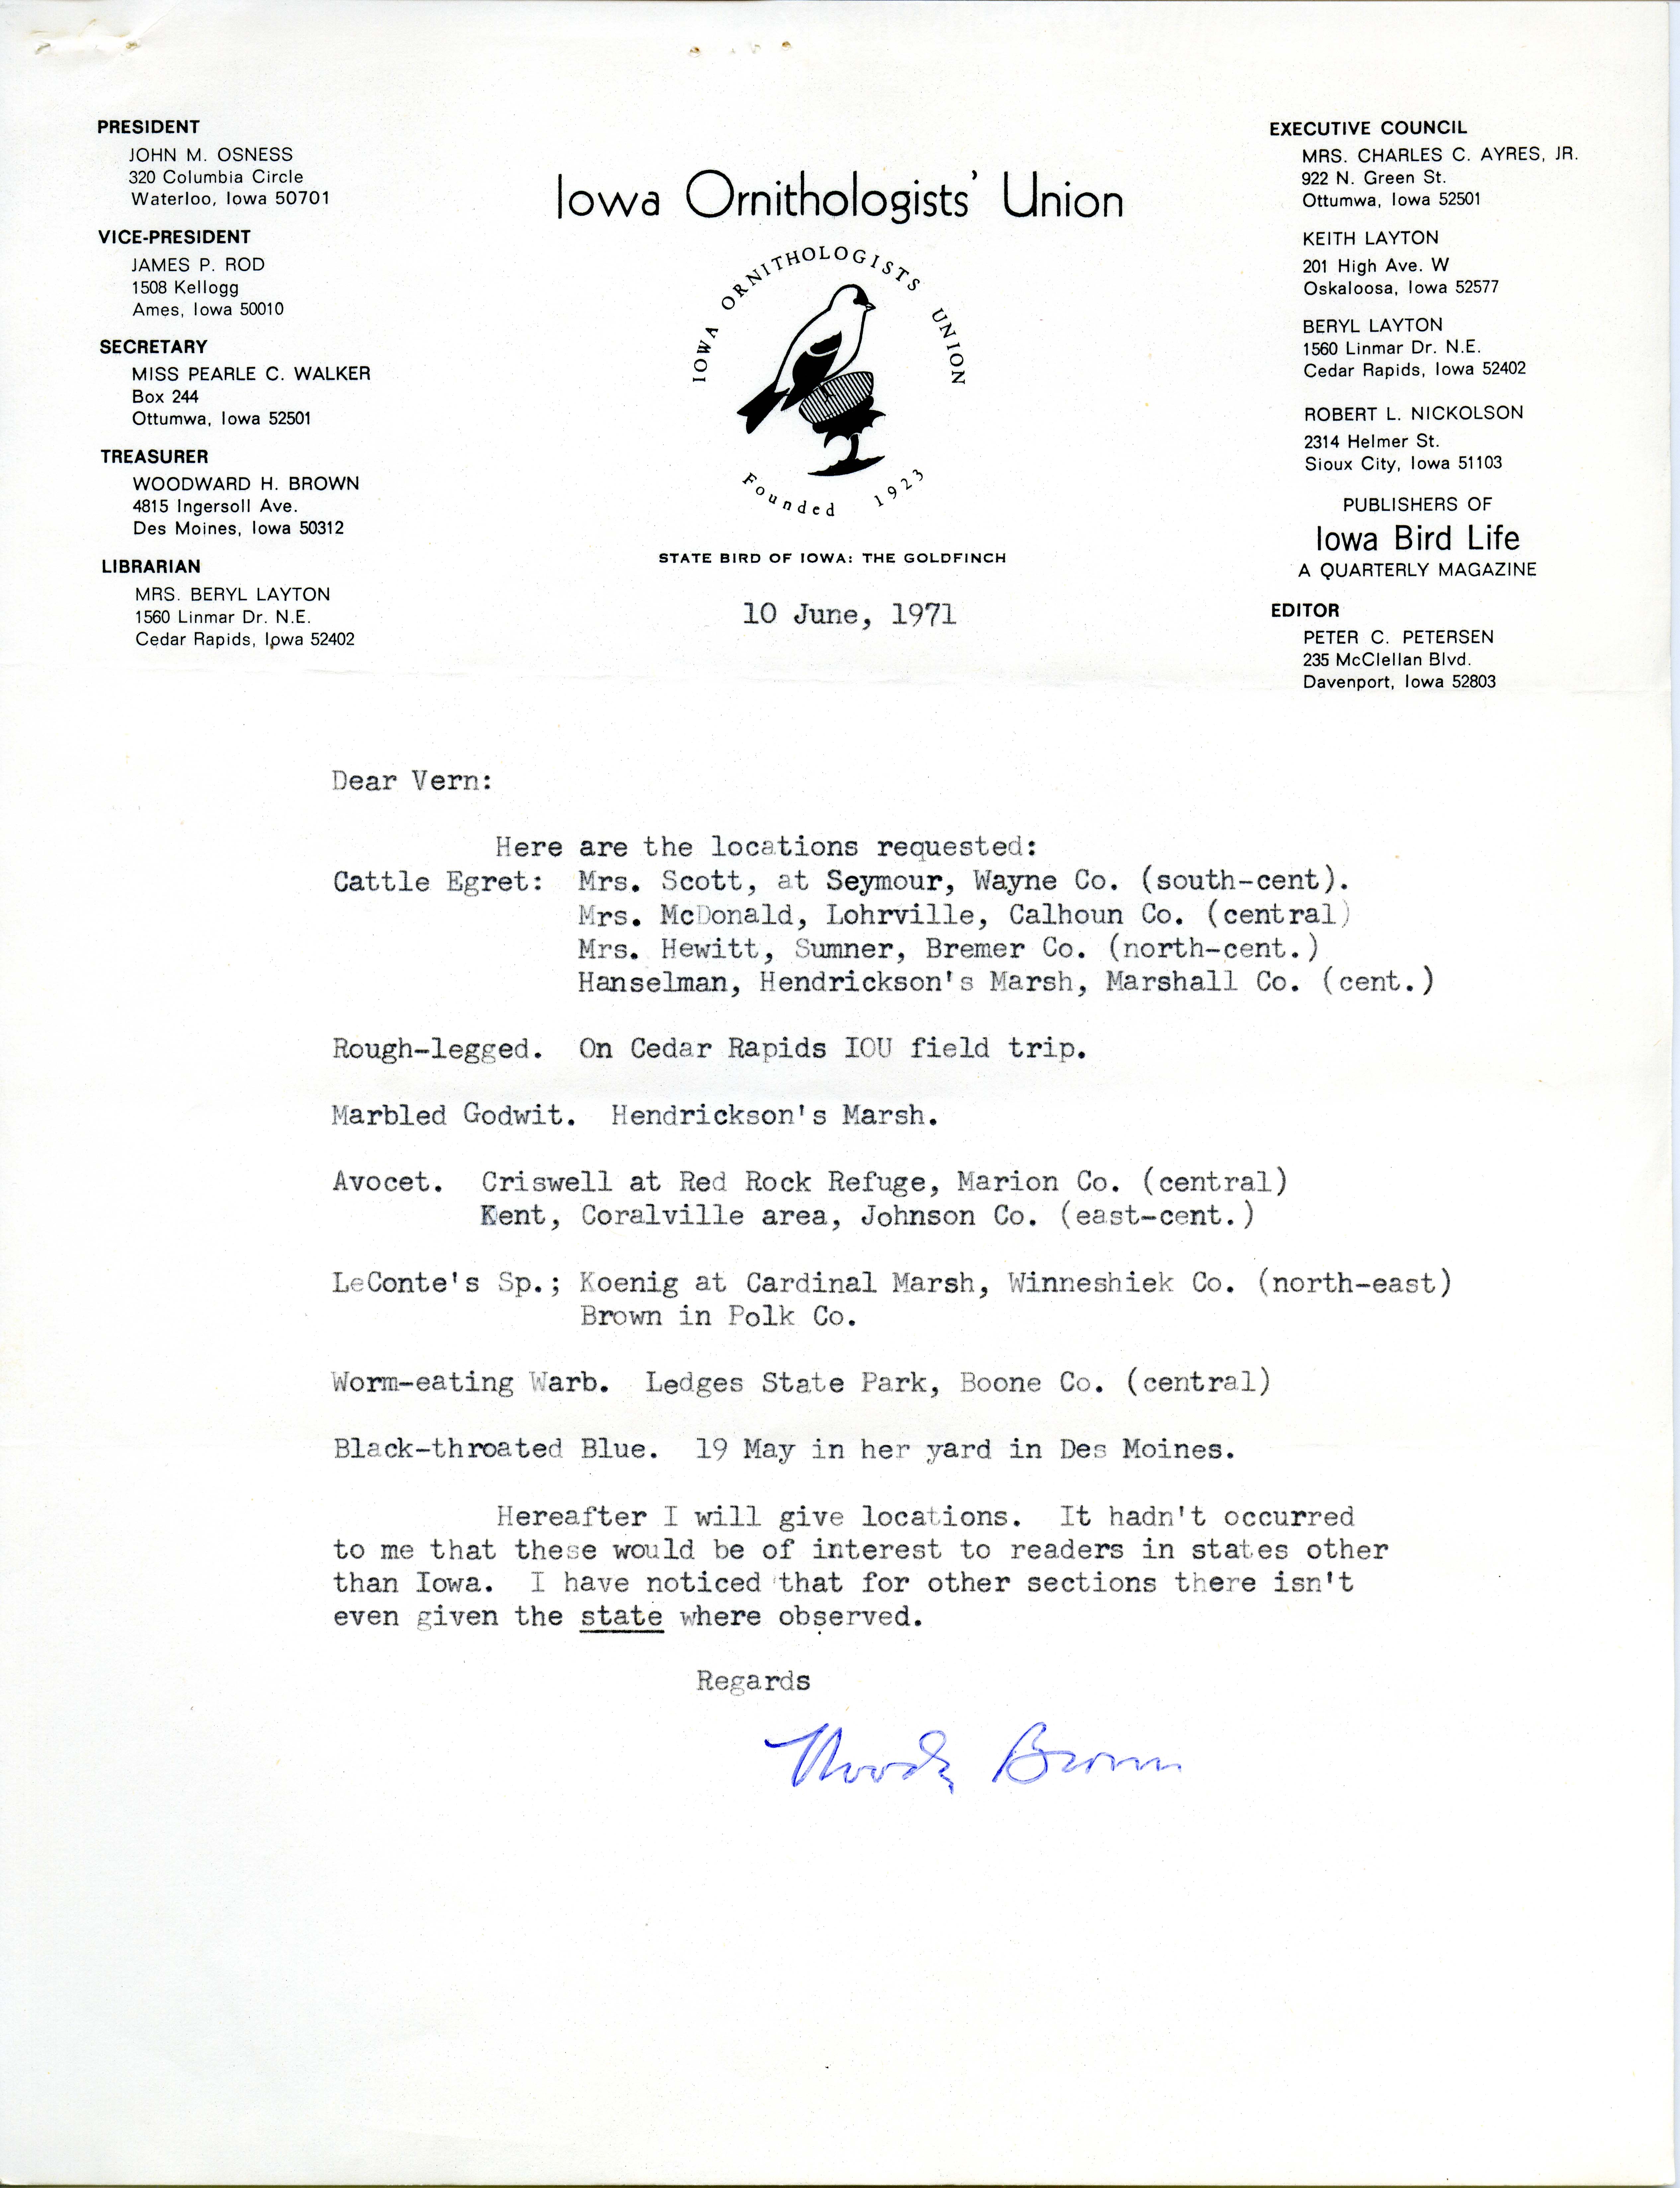 Woodward H. Brown letter to Vernon M. Kleen regarding locations of bird sightings, June 10, 1971